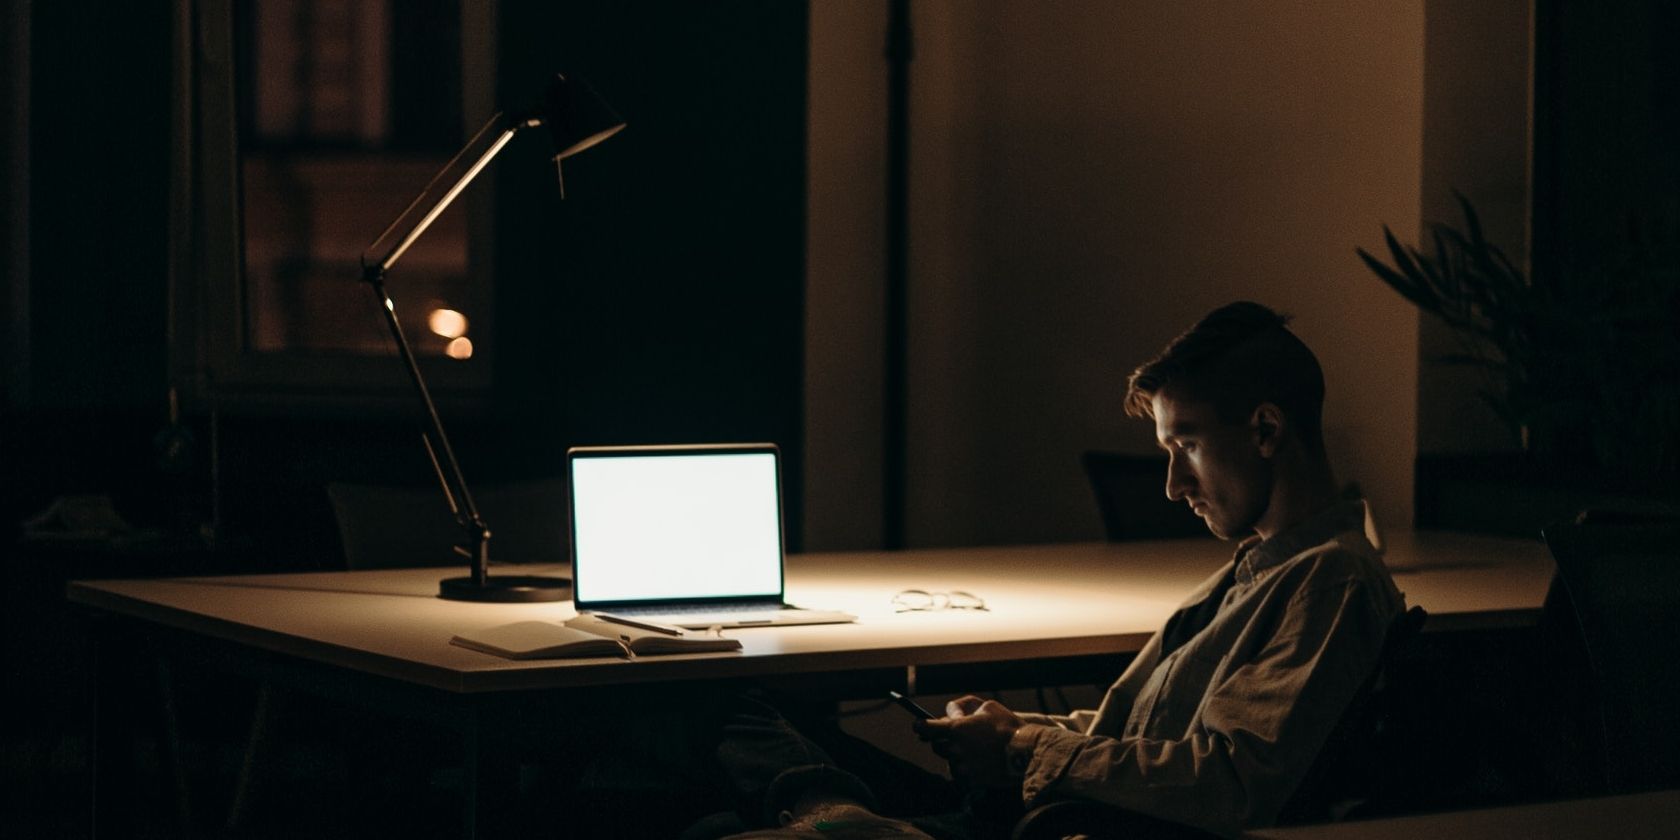 MacBook sitting on desk in dark room with man looking at phone